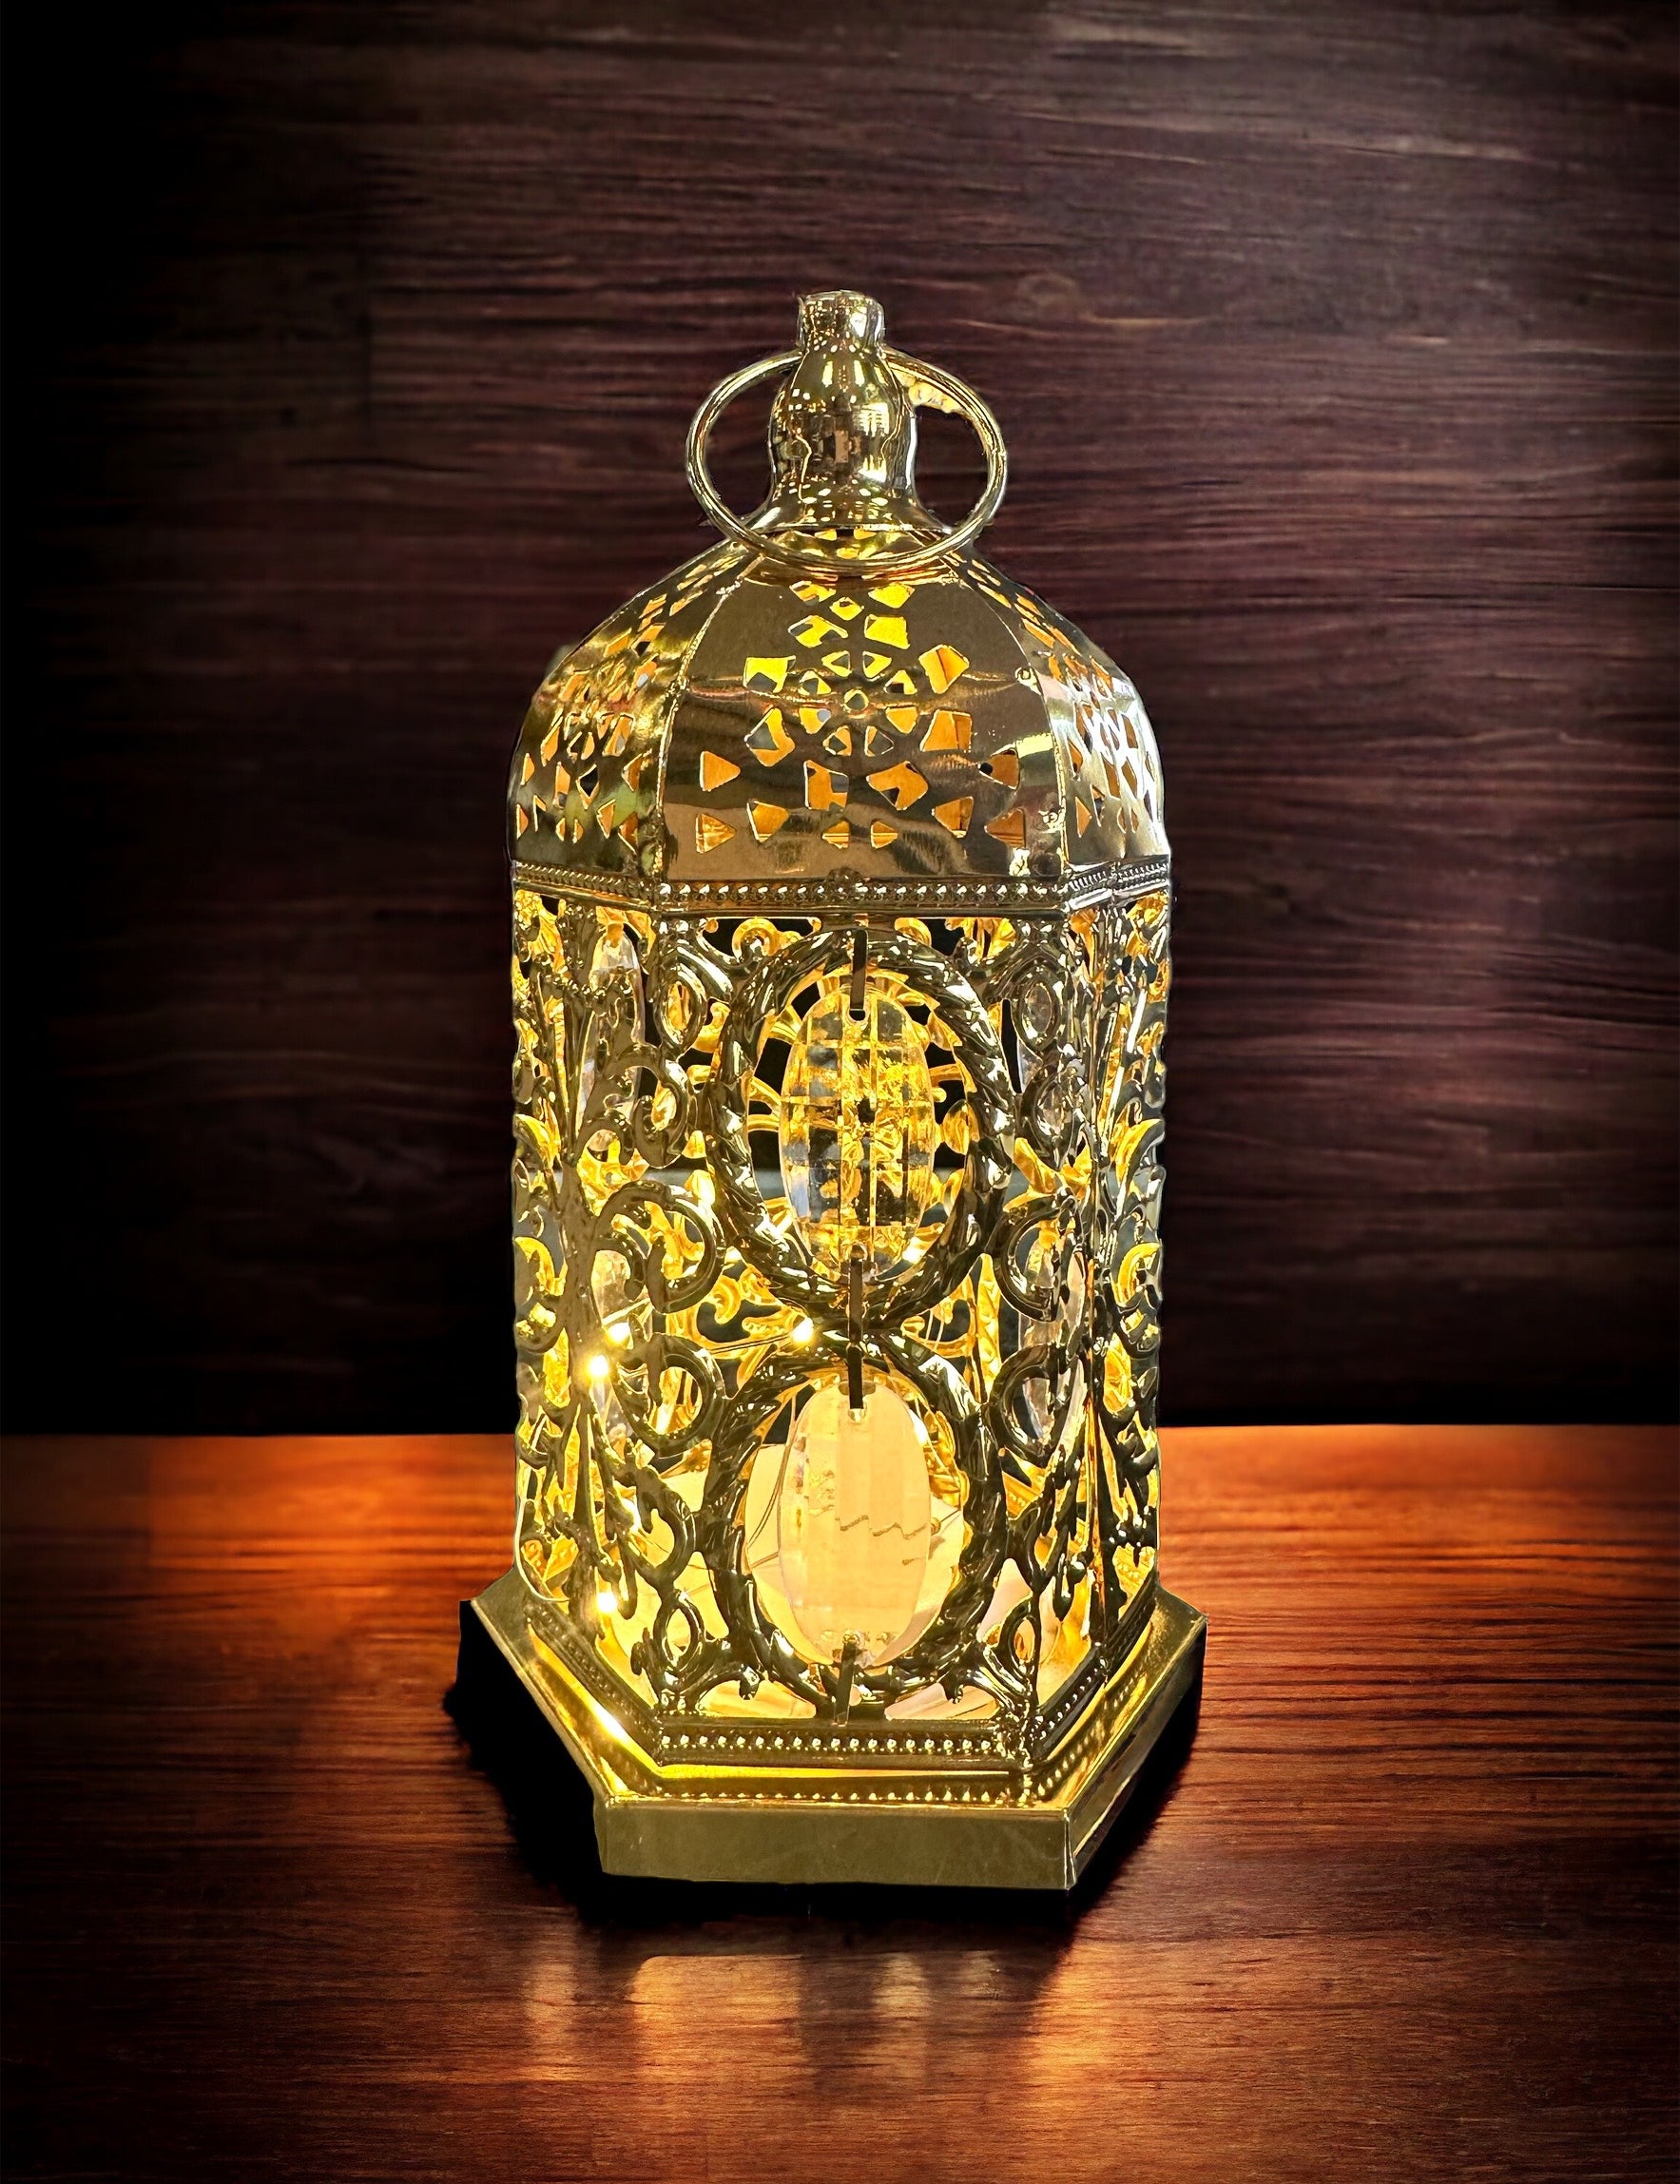 Gold Fancy Ramadan Lantern Lamp with LED Light | Khan El Khalili